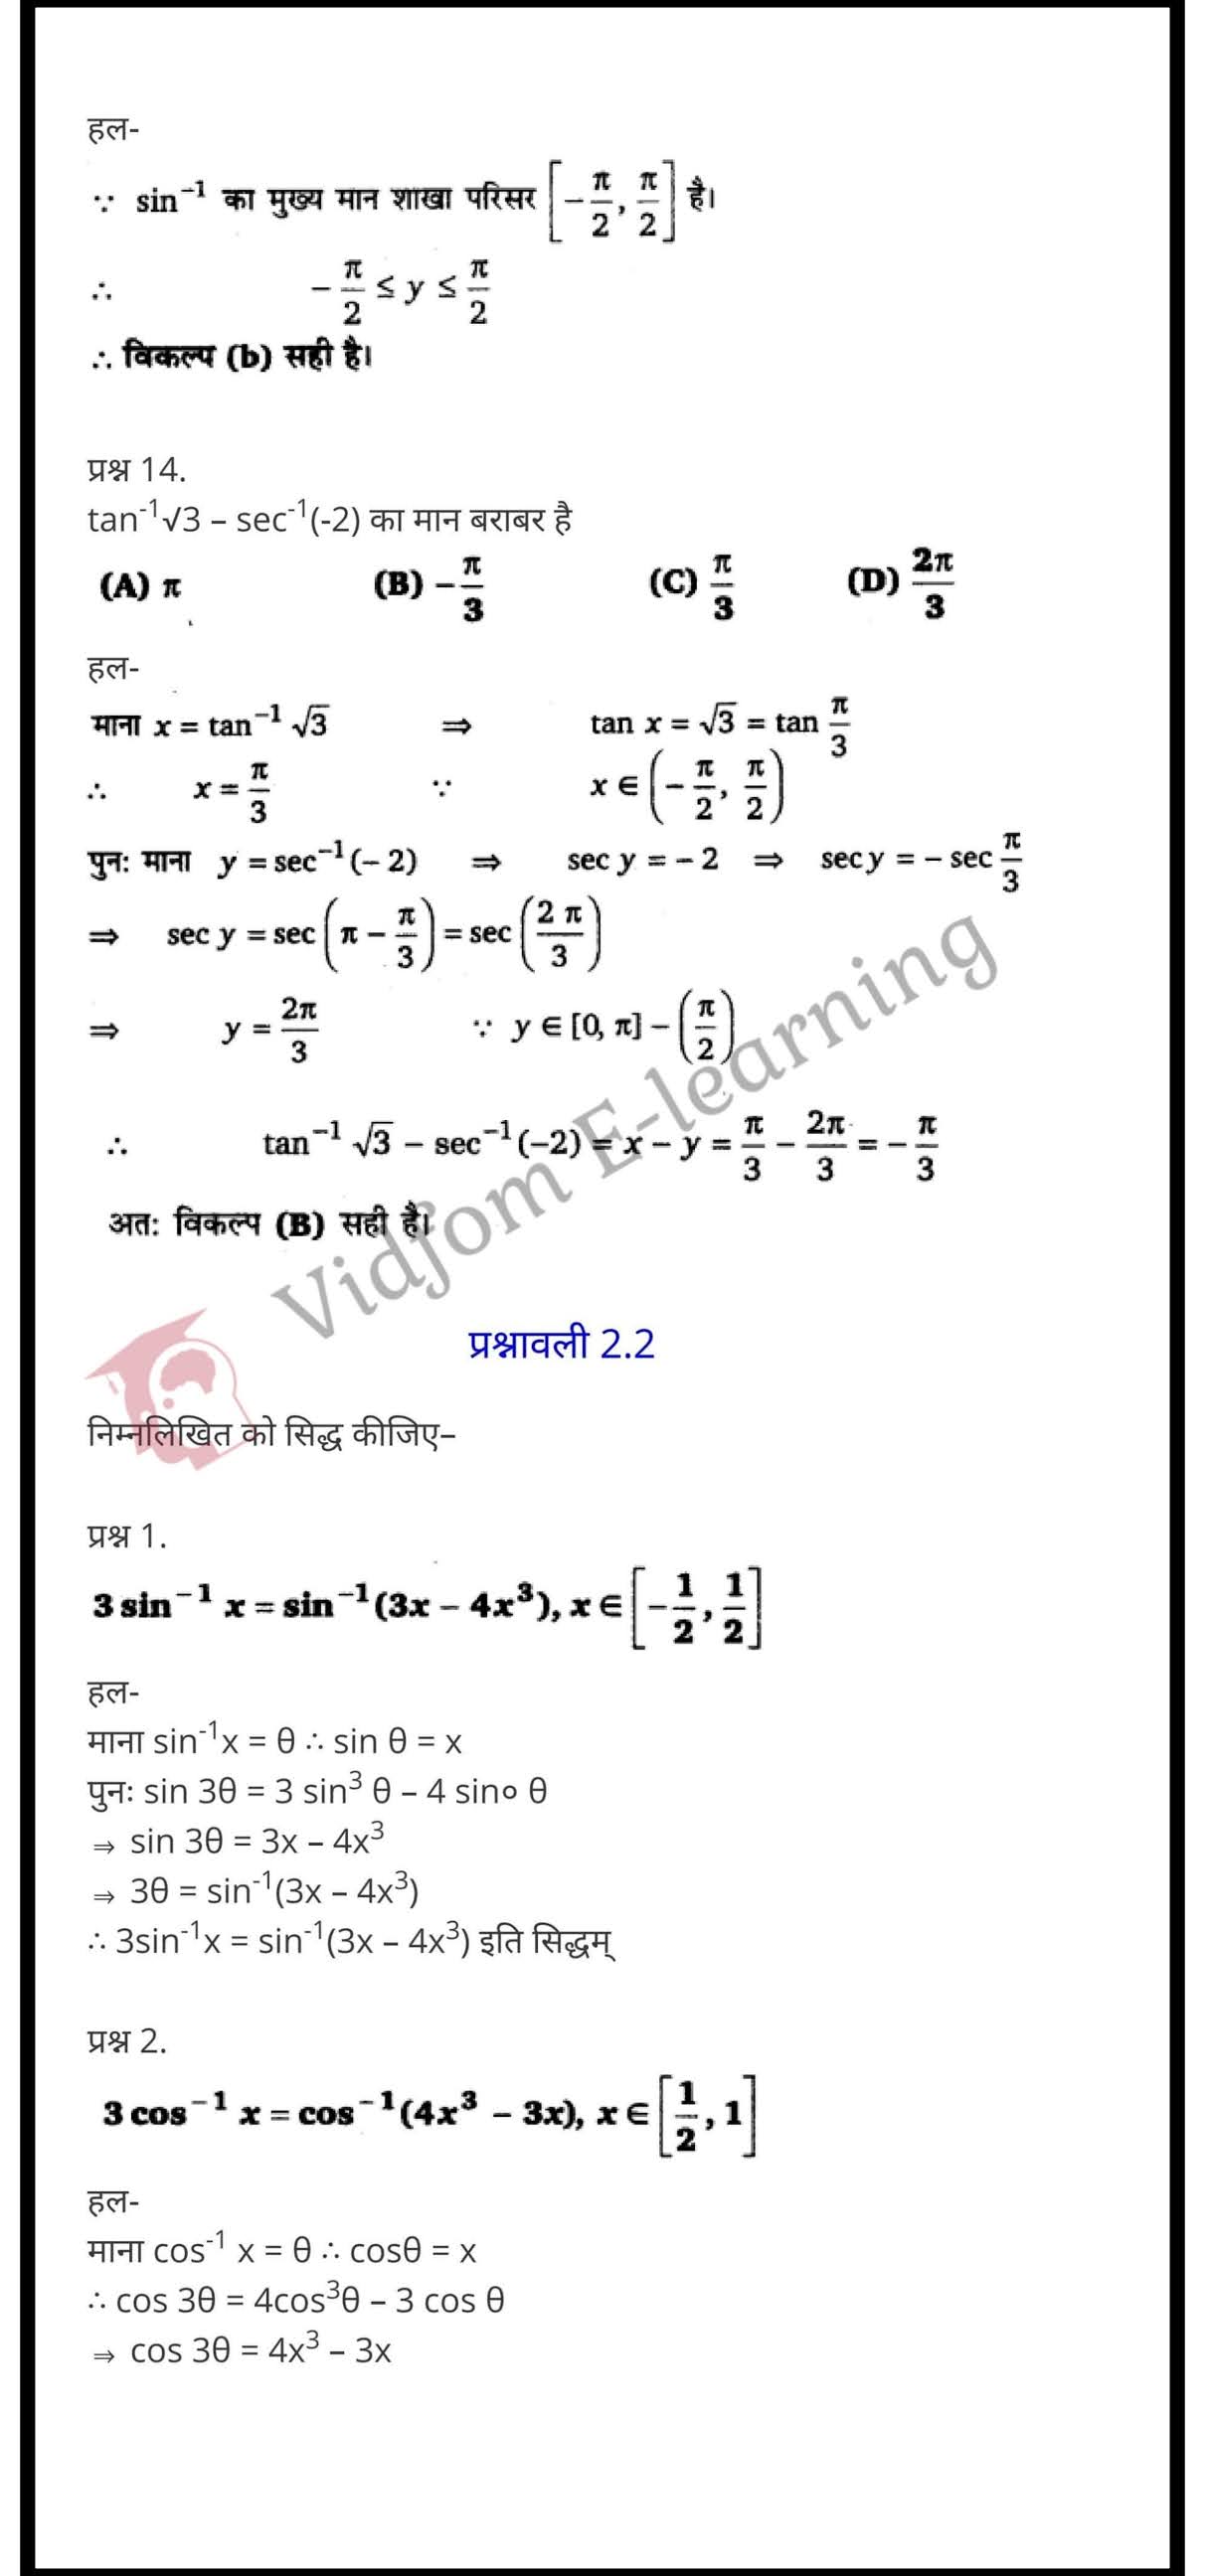 कक्षा 12 गणित  के नोट्स  हिंदी में एनसीईआरटी समाधान,     class 12 Maths Chapter 2,   class 12 Maths Chapter 2 ncert solutions in Hindi,   class 12 Maths Chapter 2 notes in hindi,   class 12 Maths Chapter 2 question answer,   class 12 Maths Chapter 2 notes,   class 12 Maths Chapter 2 class 12 Maths Chapter 2 in  hindi,    class 12 Maths Chapter 2 important questions in  hindi,   class 12 Maths Chapter 2 notes in hindi,    class 12 Maths Chapter 2 test,   class 12 Maths Chapter 2 pdf,   class 12 Maths Chapter 2 notes pdf,   class 12 Maths Chapter 2 exercise solutions,   class 12 Maths Chapter 2 notes study rankers,   class 12 Maths Chapter 2 notes,    class 12 Maths Chapter 2  class 12  notes pdf,   class 12 Maths Chapter 2 class 12  notes  ncert,   class 12 Maths Chapter 2 class 12 pdf,   class 12 Maths Chapter 2  book,   class 12 Maths Chapter 2 quiz class 12  ,    10  th class 12 Maths Chapter 2  book up board,   up board 10  th class 12 Maths Chapter 2 notes,  class 12 Maths,   class 12 Maths ncert solutions in Hindi,   class 12 Maths notes in hindi,   class 12 Maths question answer,   class 12 Maths notes,  class 12 Maths class 12 Maths Chapter 2 in  hindi,    class 12 Maths important questions in  hindi,   class 12 Maths notes in hindi,    class 12 Maths test,  class 12 Maths class 12 Maths Chapter 2 pdf,   class 12 Maths notes pdf,   class 12 Maths exercise solutions,   class 12 Maths,  class 12 Maths notes study rankers,   class 12 Maths notes,  class 12 Maths notes,   class 12 Maths  class 12  notes pdf,   class 12 Maths class 12  notes  ncert,   class 12 Maths class 12 pdf,   class 12 Maths  book,  class 12 Maths quiz class 12  ,  10  th class 12 Maths    book up board,    up board 10  th class 12 Maths notes,      कक्षा 12 गणित अध्याय 2 ,  कक्षा 12 गणित, कक्षा 12 गणित अध्याय 2  के नोट्स हिंदी में,  कक्षा 12 का हिंदी अध्याय 2 का प्रश्न उत्तर,  कक्षा 12 गणित अध्याय 2  के नोट्स,  10 कक्षा गणित  हिंदी में, कक्षा 12 गणित अध्याय 2  हिंदी में,  कक्षा 12 गणित अध्याय 2  महत्वपूर्ण प्रश्न हिंदी में, कक्षा 12   हिंदी के नोट्स  हिंदी में, गणित हिंदी में  कक्षा 12 नोट्स pdf,    गणित हिंदी में  कक्षा 12 नोट्स 2021 ncert,   गणित हिंदी  कक्षा 12 pdf,   गणित हिंदी में  पुस्तक,   गणित हिंदी में की बुक,   गणित हिंदी में  प्रश्नोत्तरी class 12 ,  बिहार बोर्ड   पुस्तक 12वीं हिंदी नोट्स,    गणित कक्षा 12 नोट्स 2021 ncert,   गणित  कक्षा 12 pdf,   गणित  पुस्तक,   गणित  प्रश्नोत्तरी class 12, कक्षा 12 गणित,  कक्षा 12 गणित  के नोट्स हिंदी में,  कक्षा 12 का हिंदी का प्रश्न उत्तर,  कक्षा 12 गणित  के नोट्स,  10 कक्षा हिंदी 2021  हिंदी में, कक्षा 12 गणित  हिंदी में,  कक्षा 12 गणित  महत्वपूर्ण प्रश्न हिंदी में, कक्षा 12 गणित  नोट्स  हिंदी में,